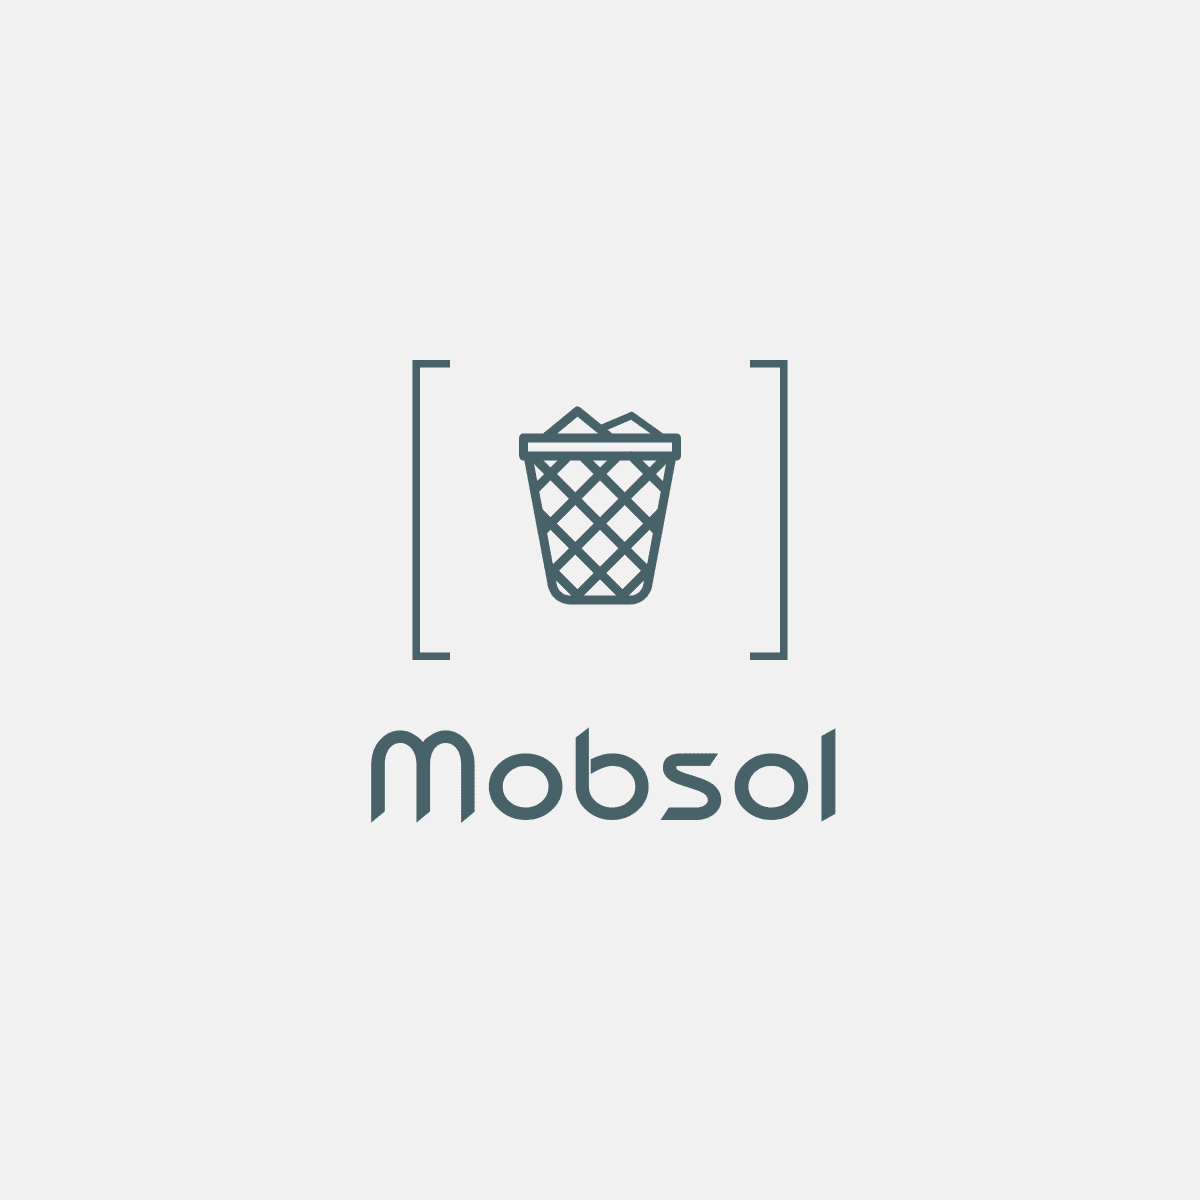 Mobsol